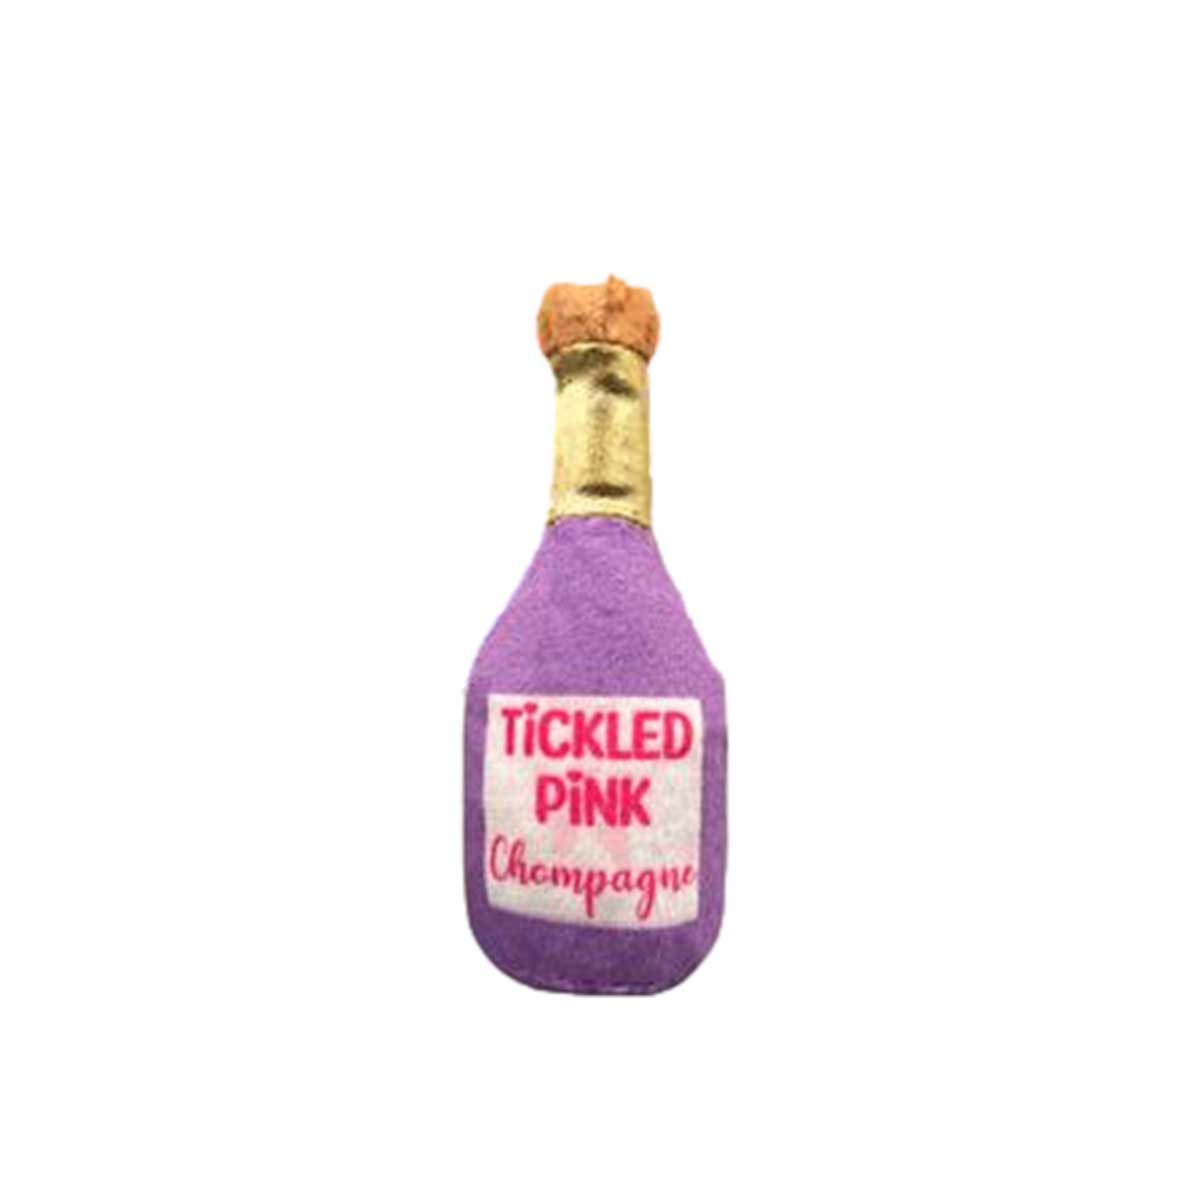 Tickled Pink Chompagne Plush Catnip Toy